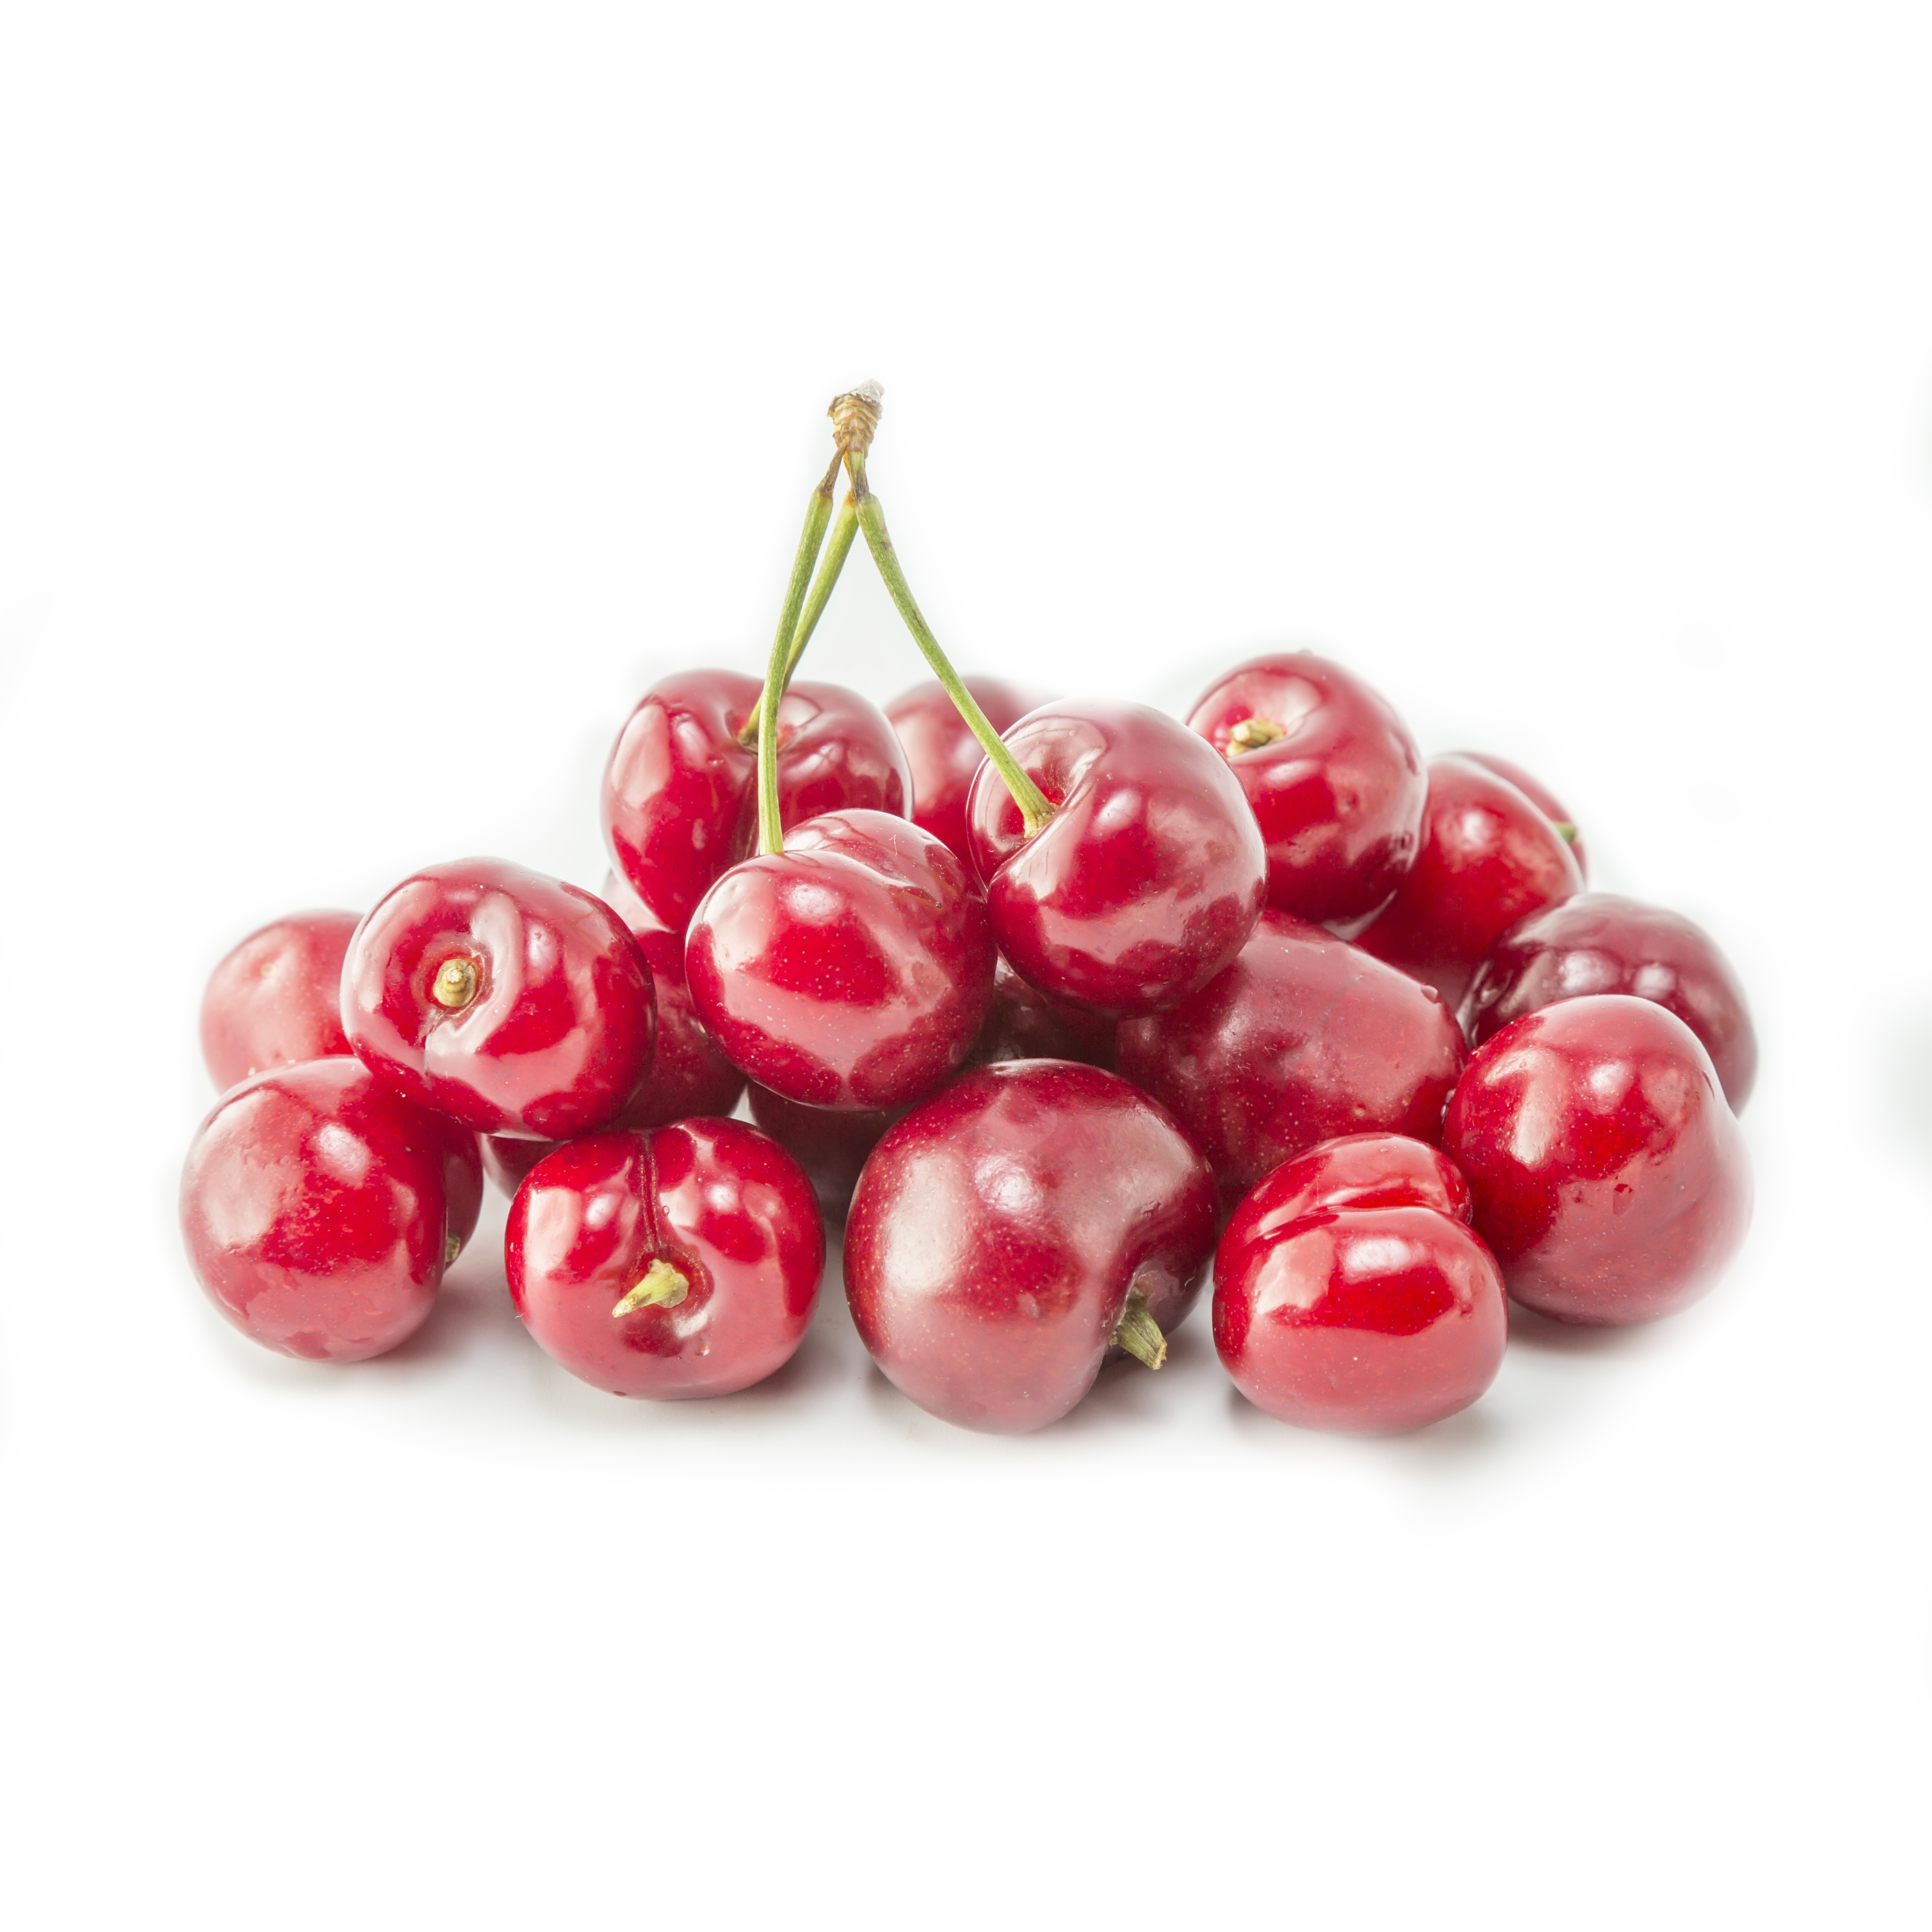 Cherries 500g - Aus*